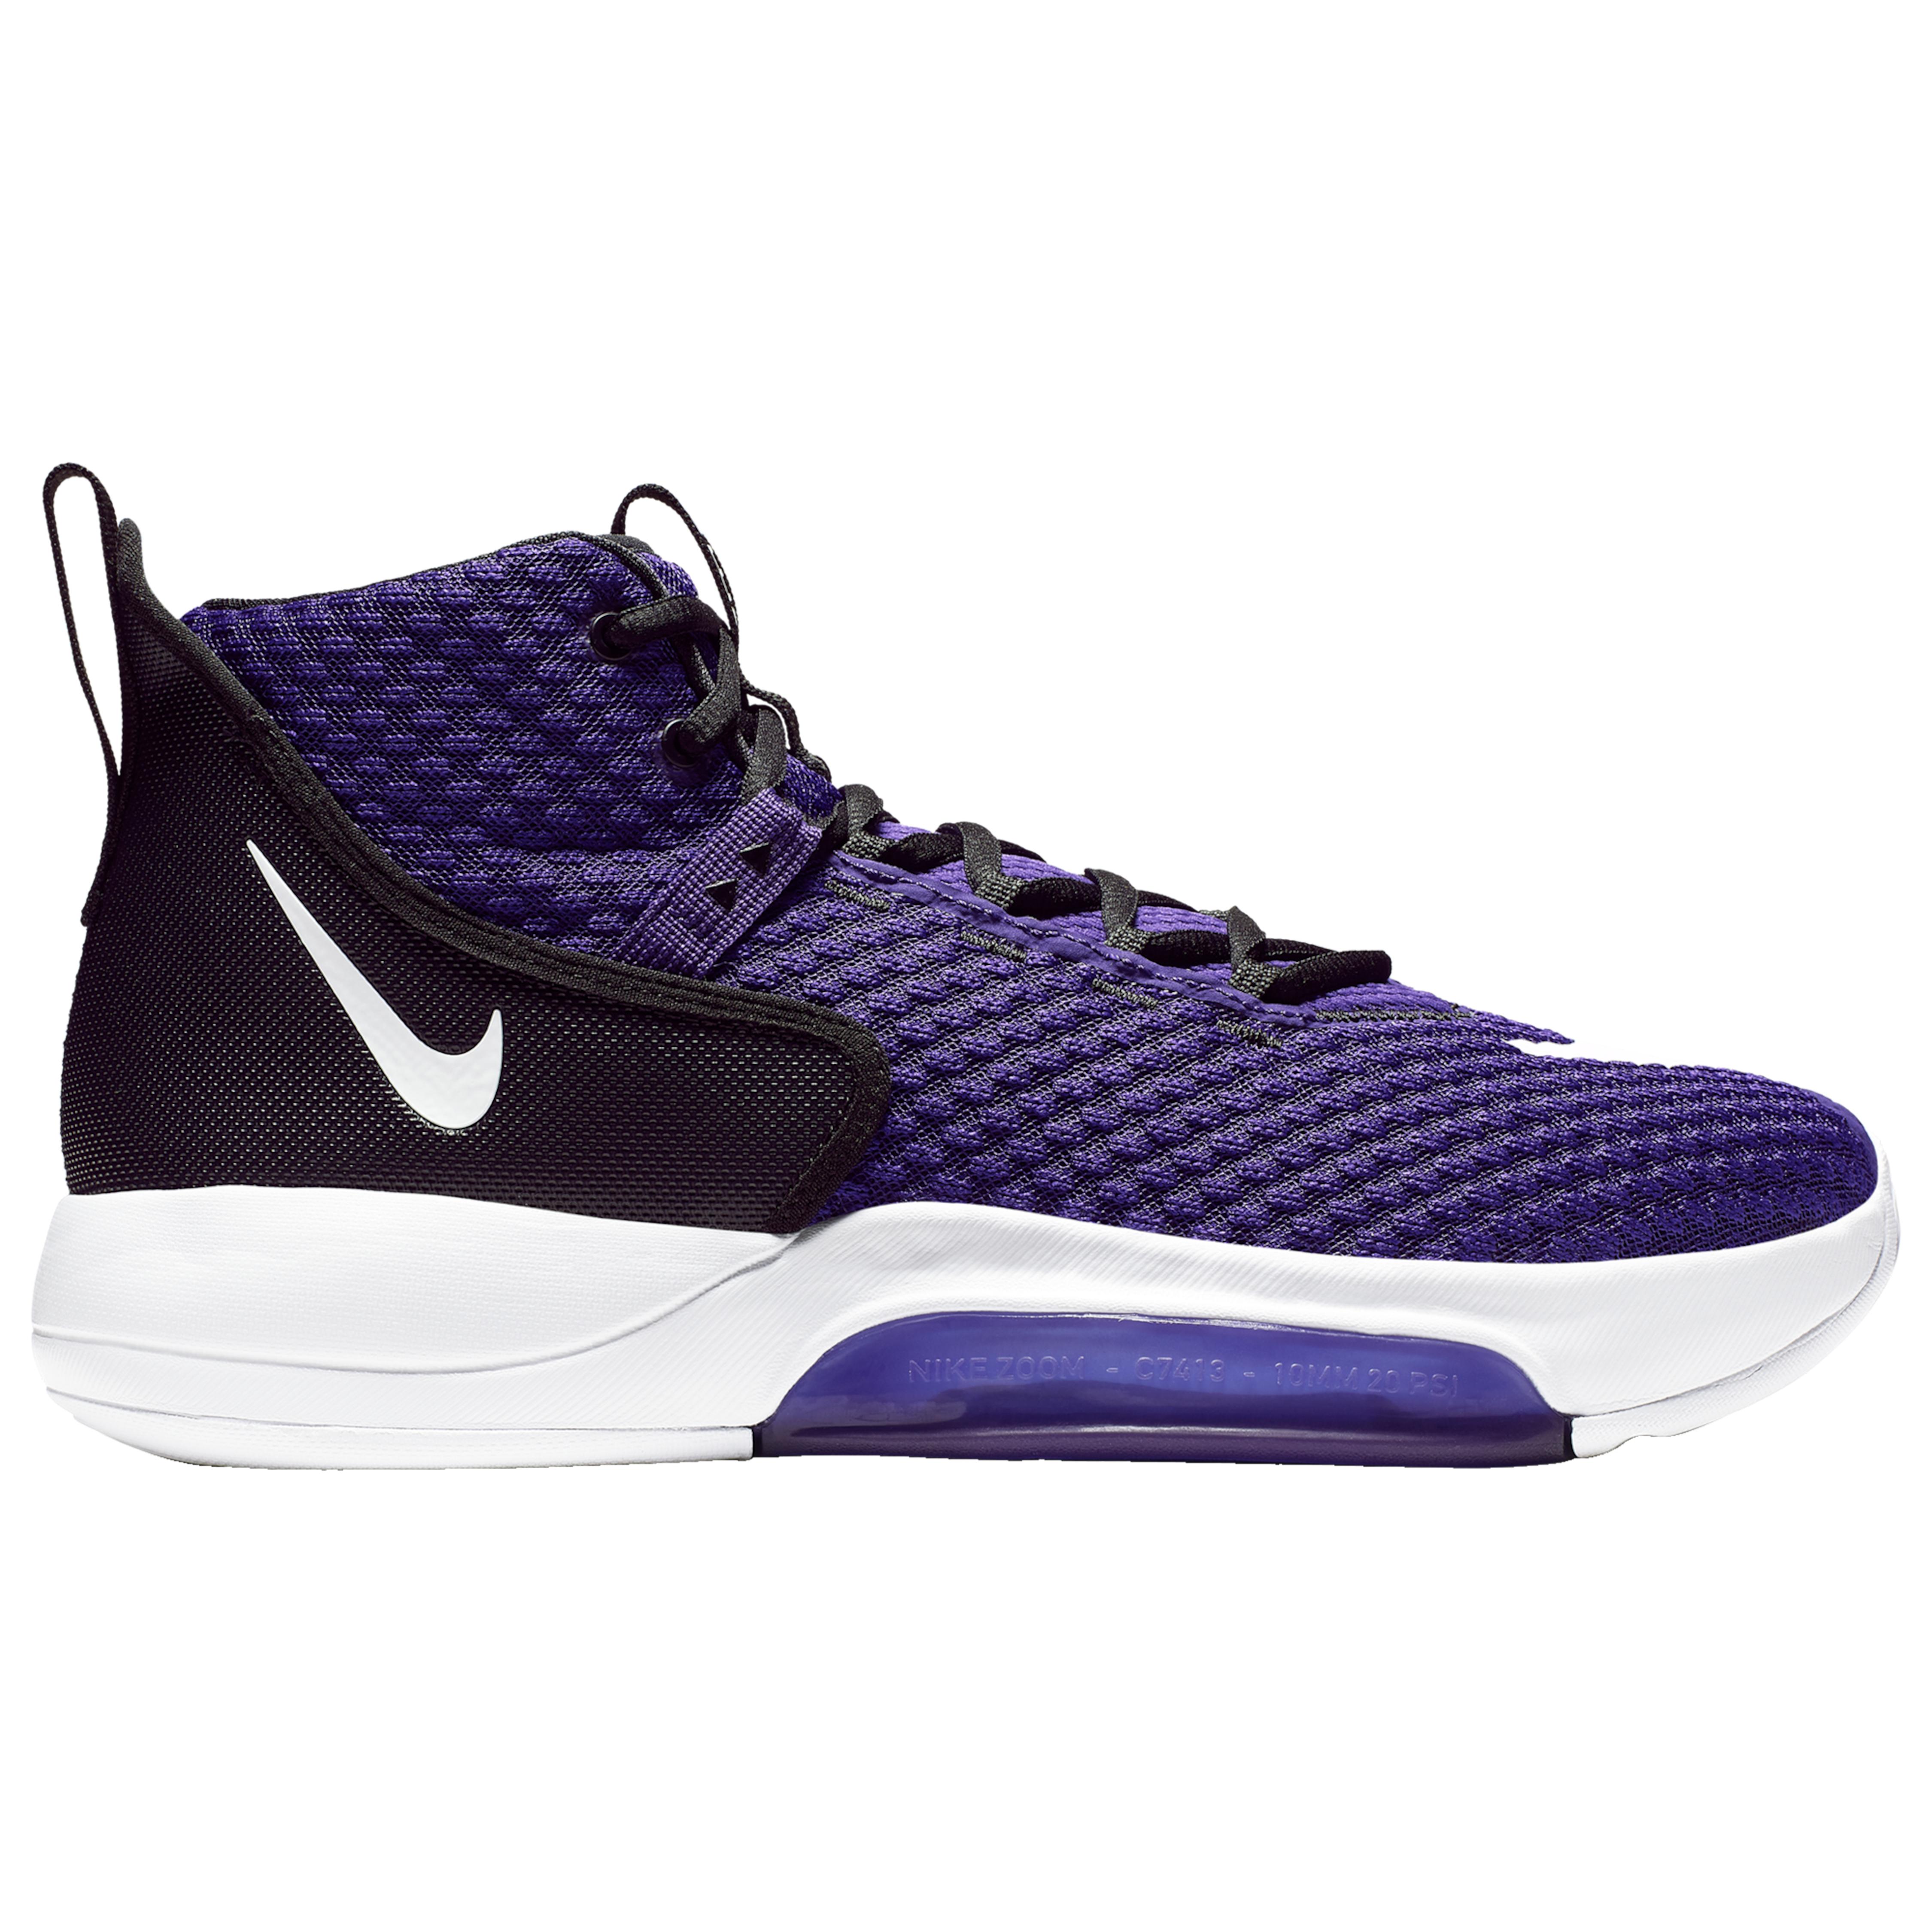 mens purple basketball shoes